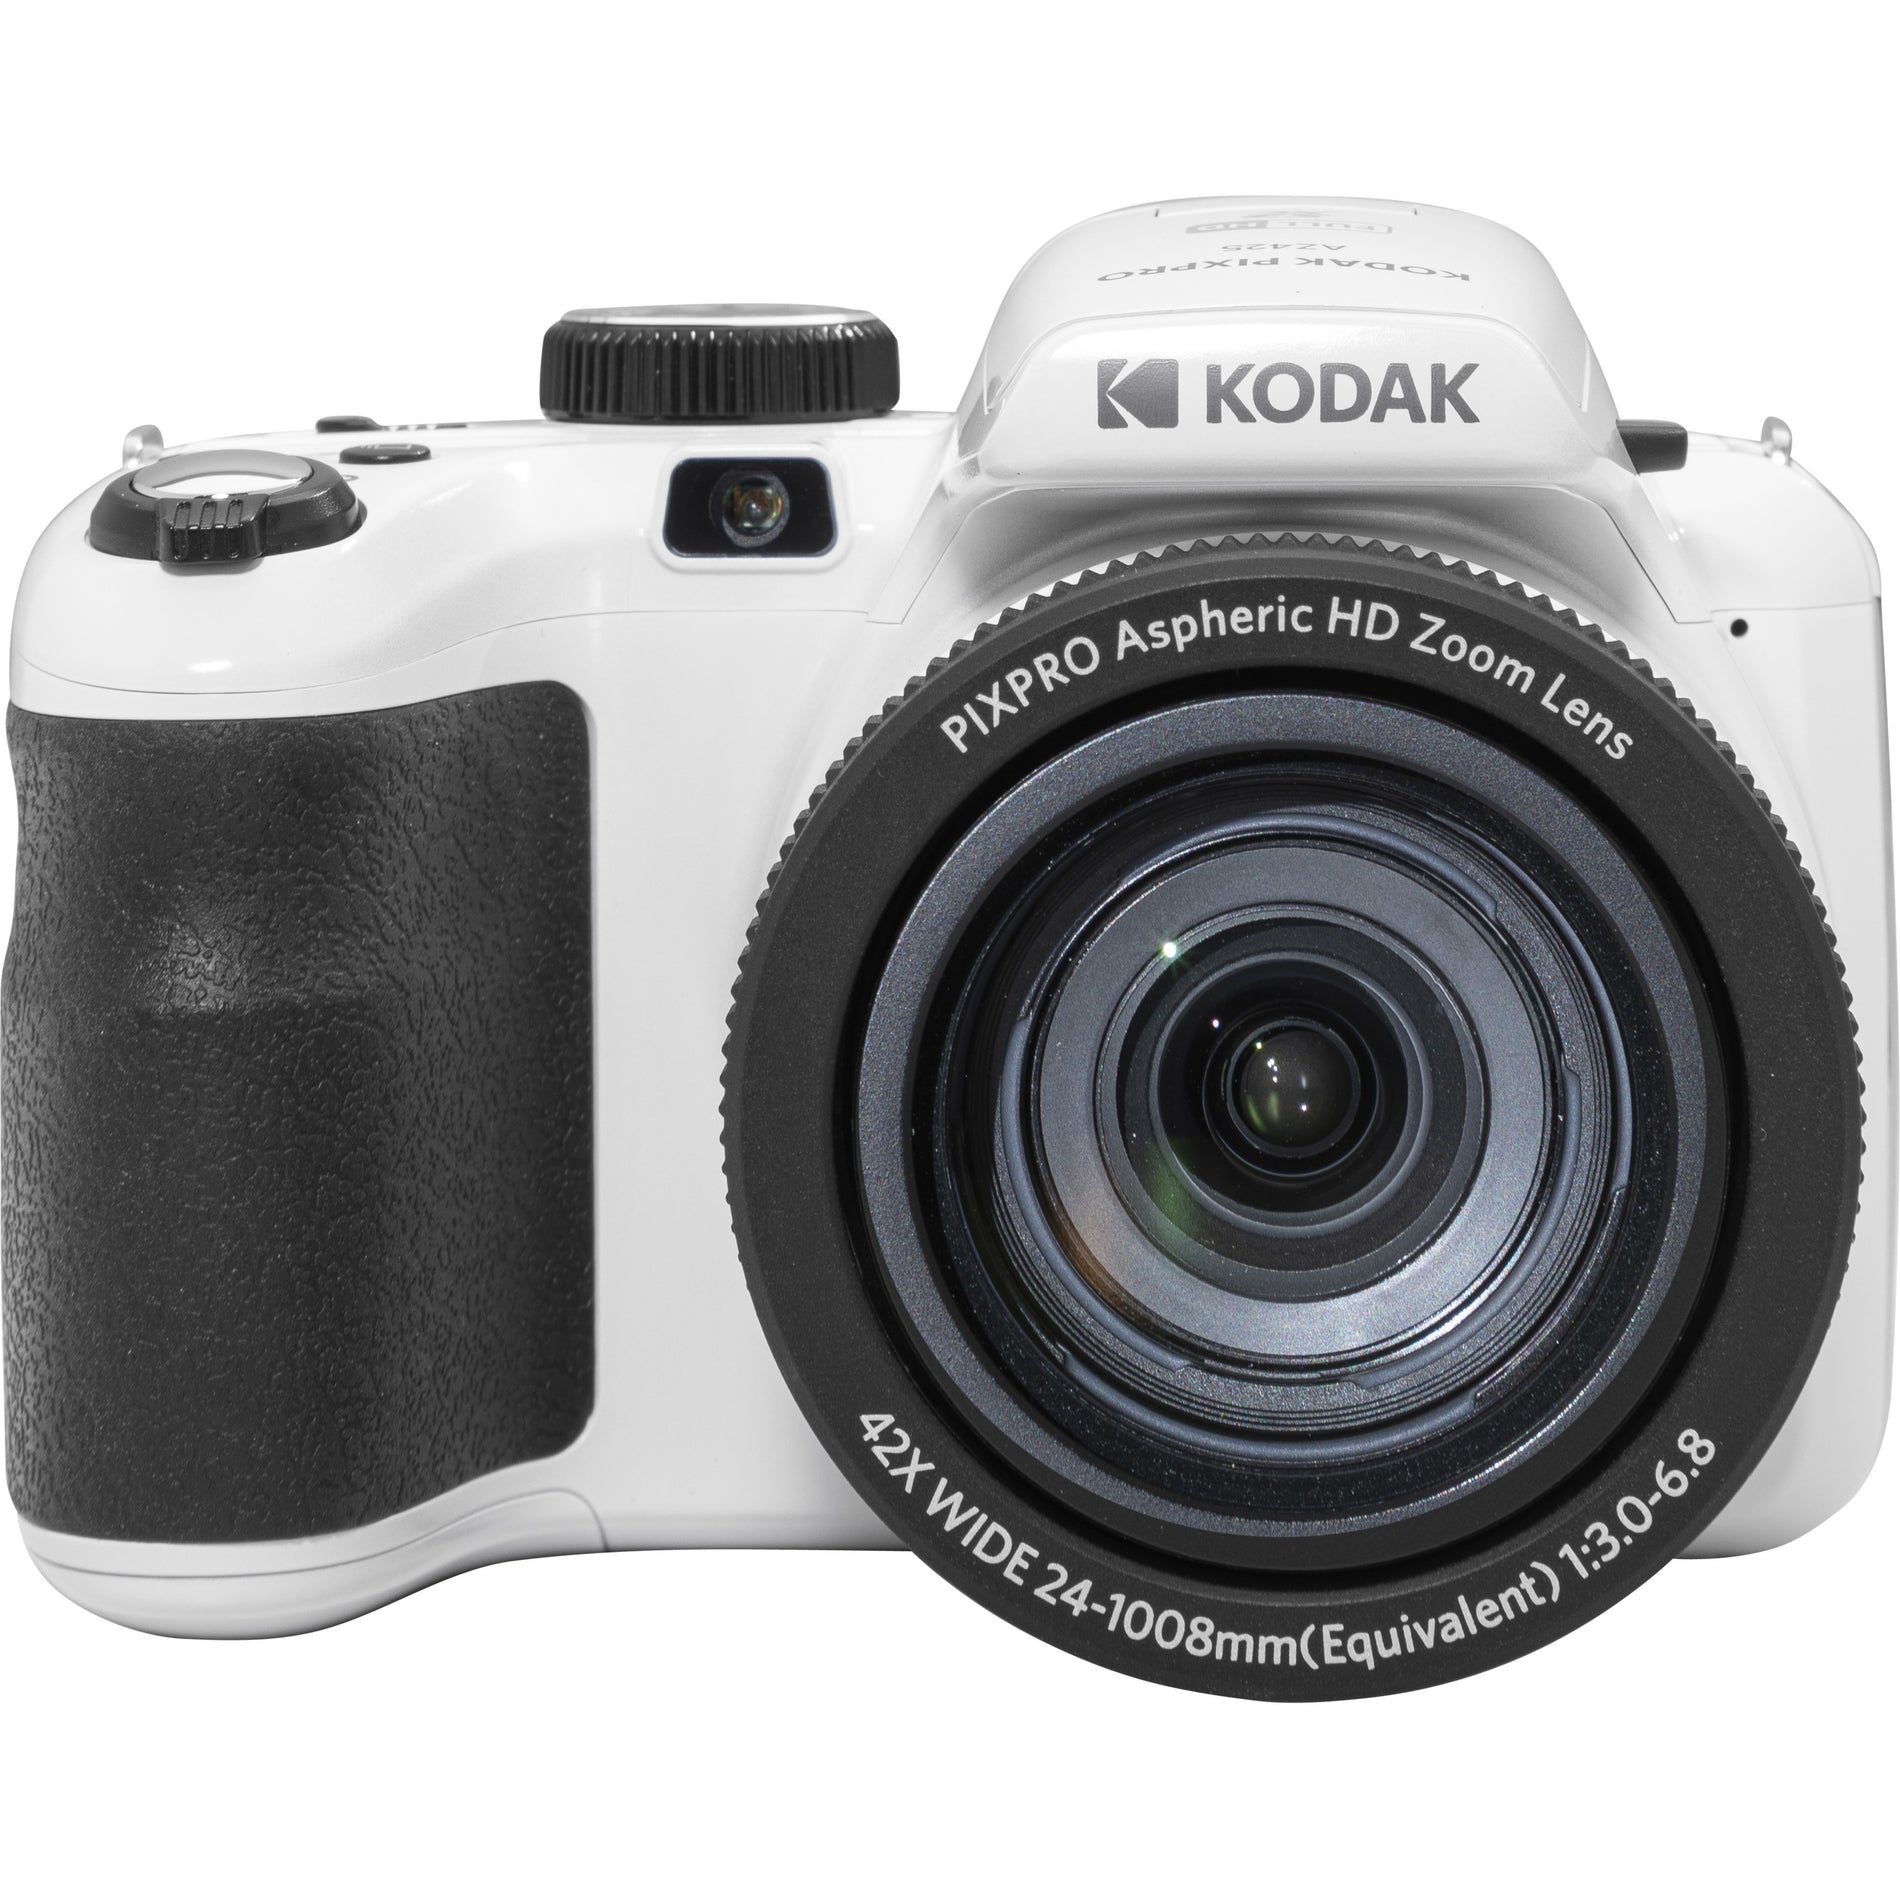 Kodak AZ425-WH PIXPRO Astro Zoom Bridge Camera, 20.7MP, 42x Optical Zoom, Full HD Video